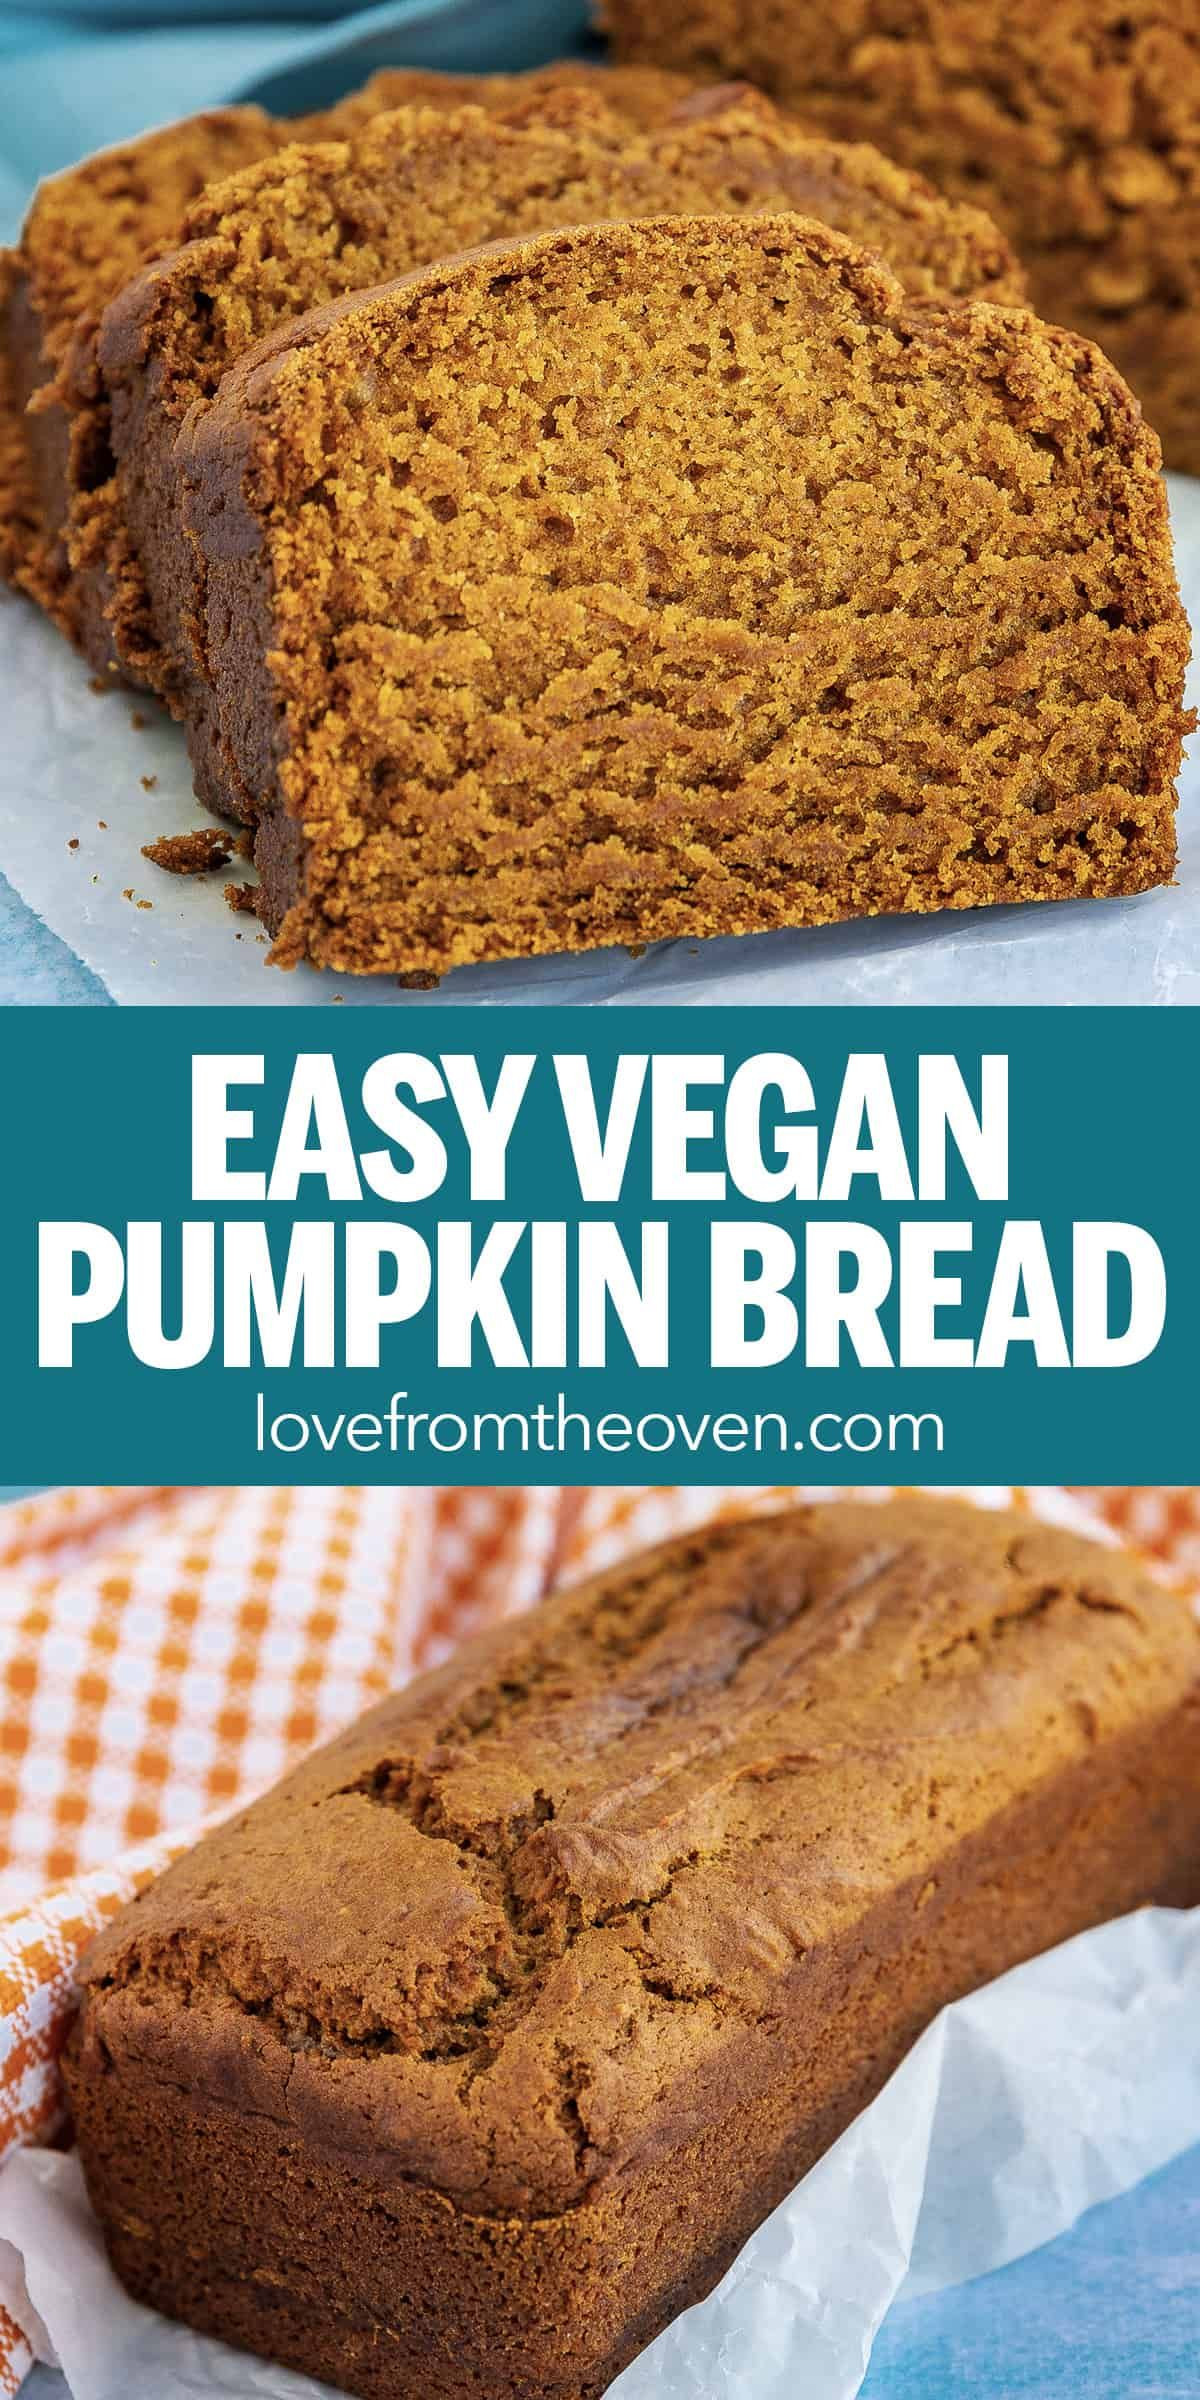 Easy Vegan Pumpkin Bread
 The Best Easy Vegan Pumpkin Bread Recipe • Love From The